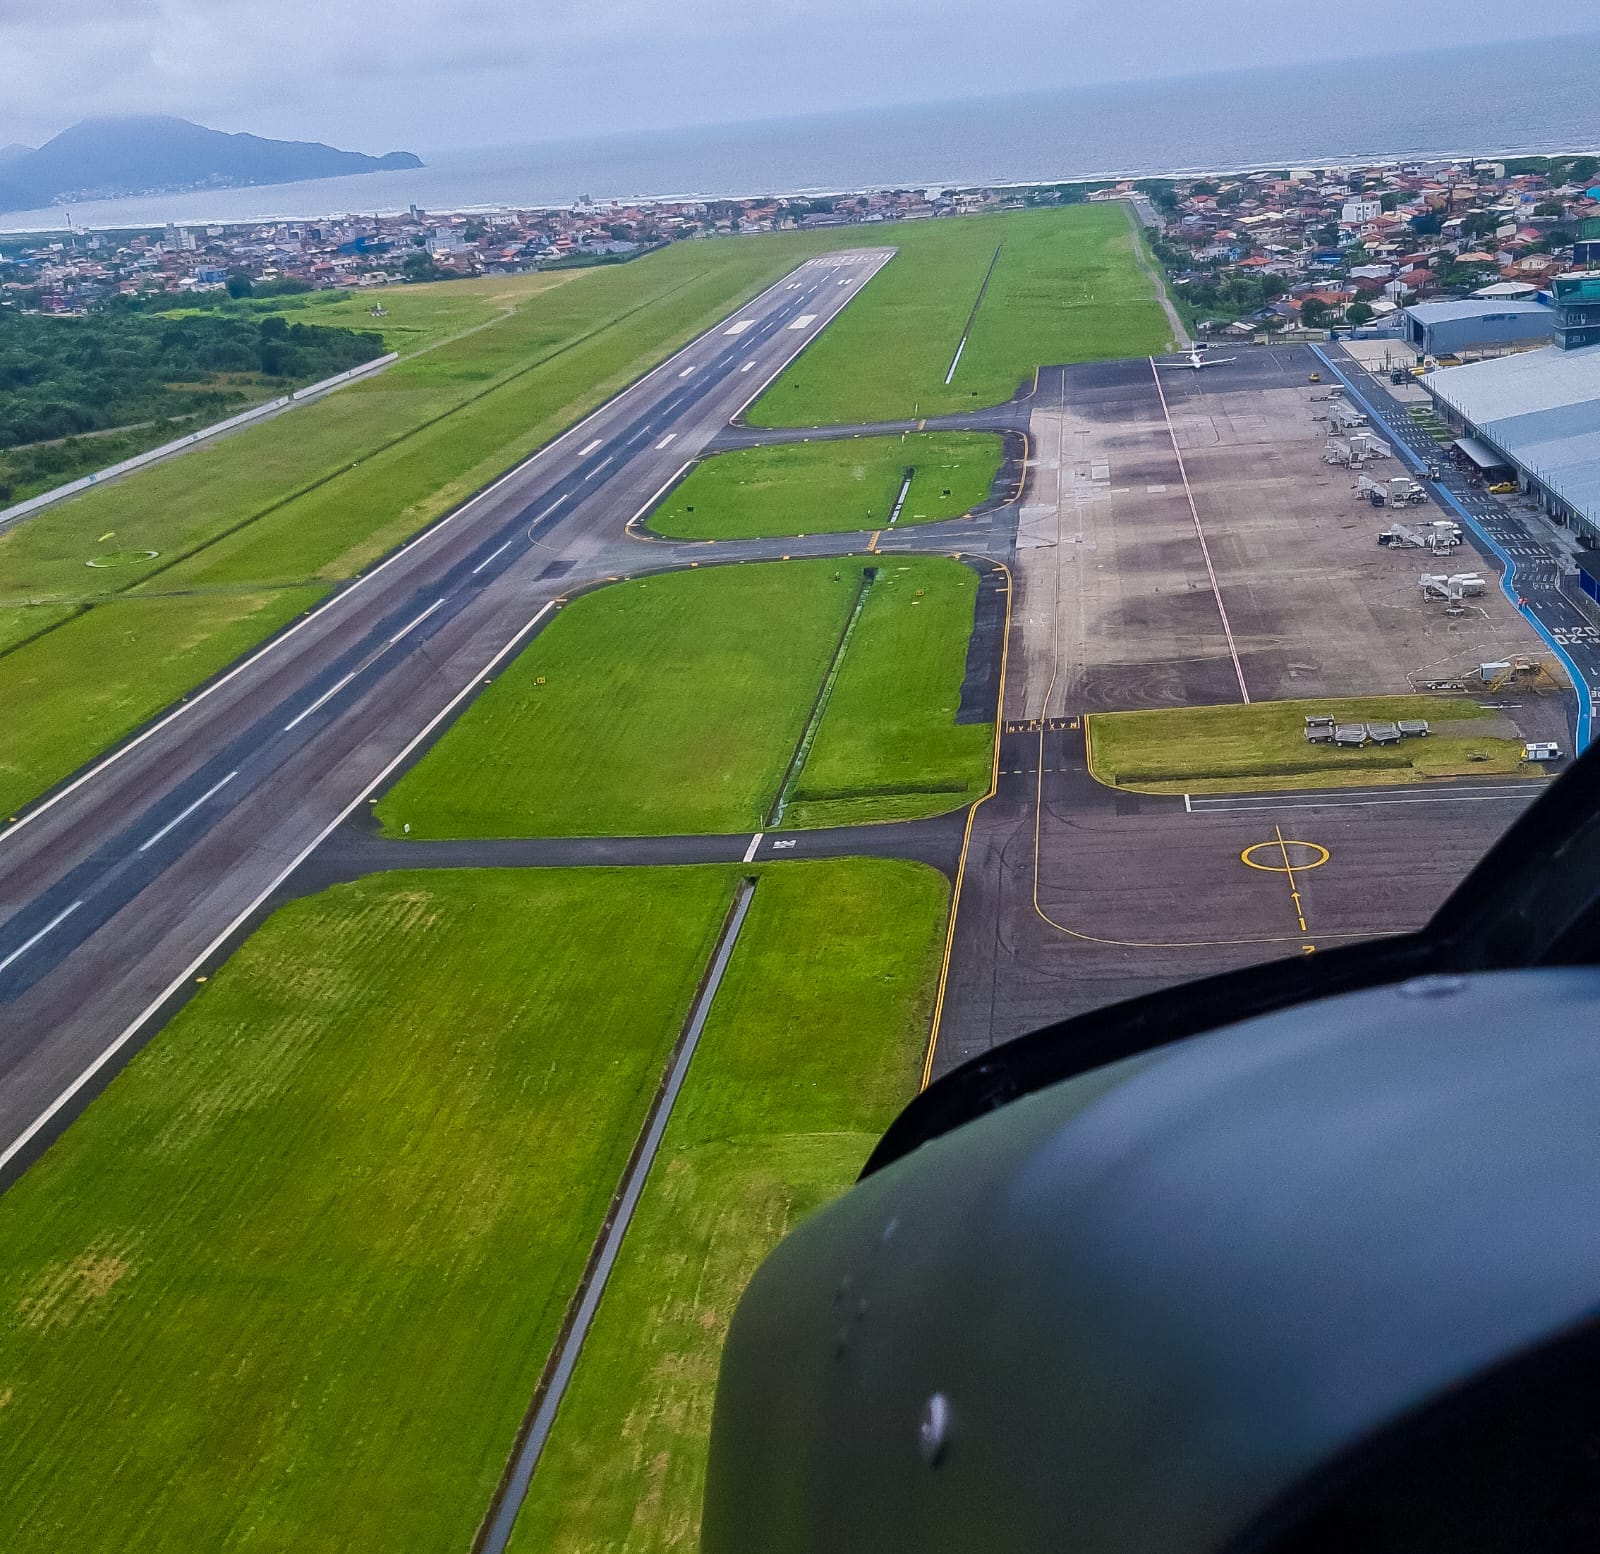 aeroporto internacional de navegantes balneário camboriú florianopolis helicoptero jato aviao santa catarina brasil embarque floripa